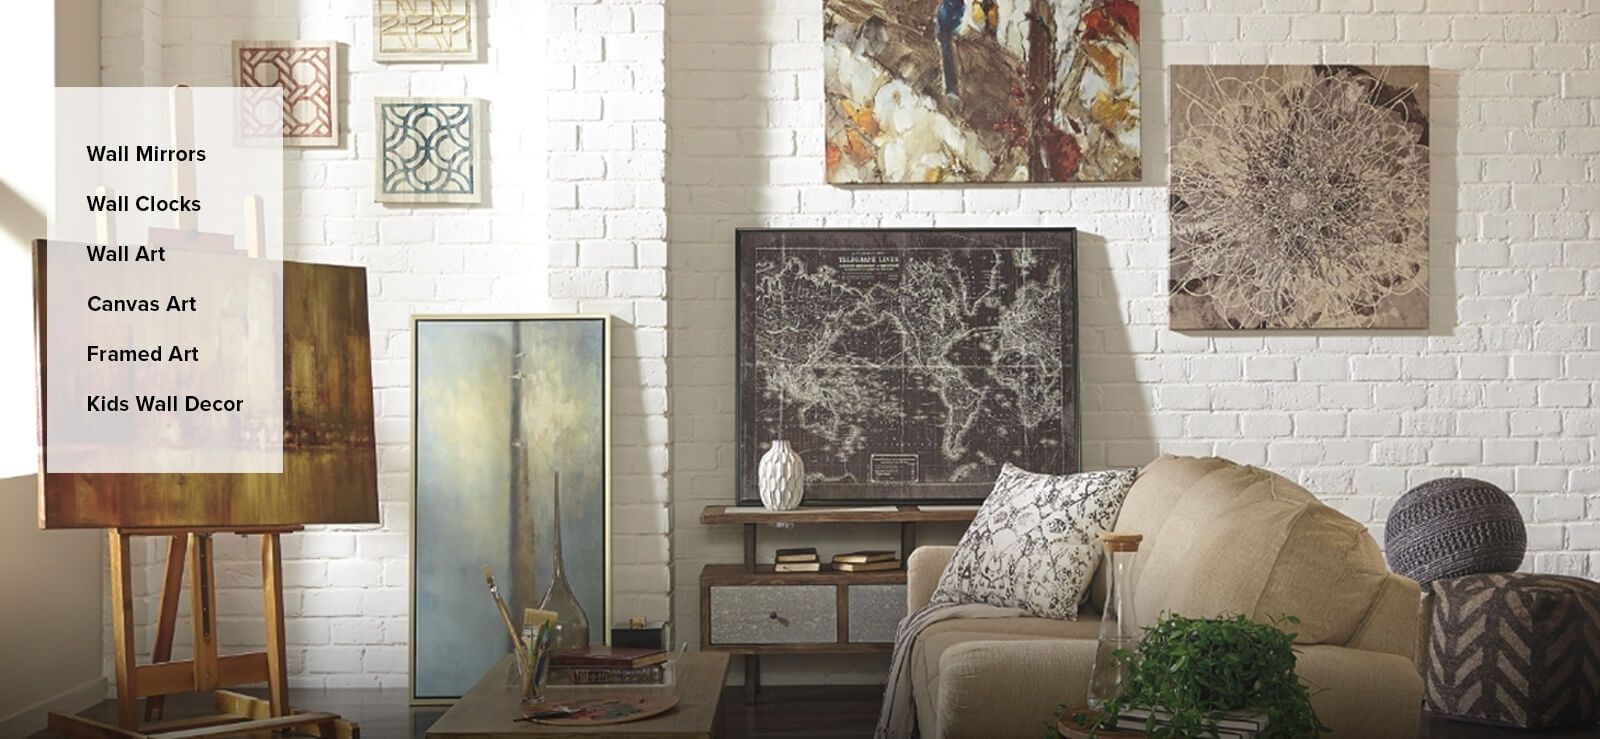 Lovely Ashley Furniture Wall Art – Kunuzmetals Intended For Current Ashley Furniture Wall Art (View 14 of 15)